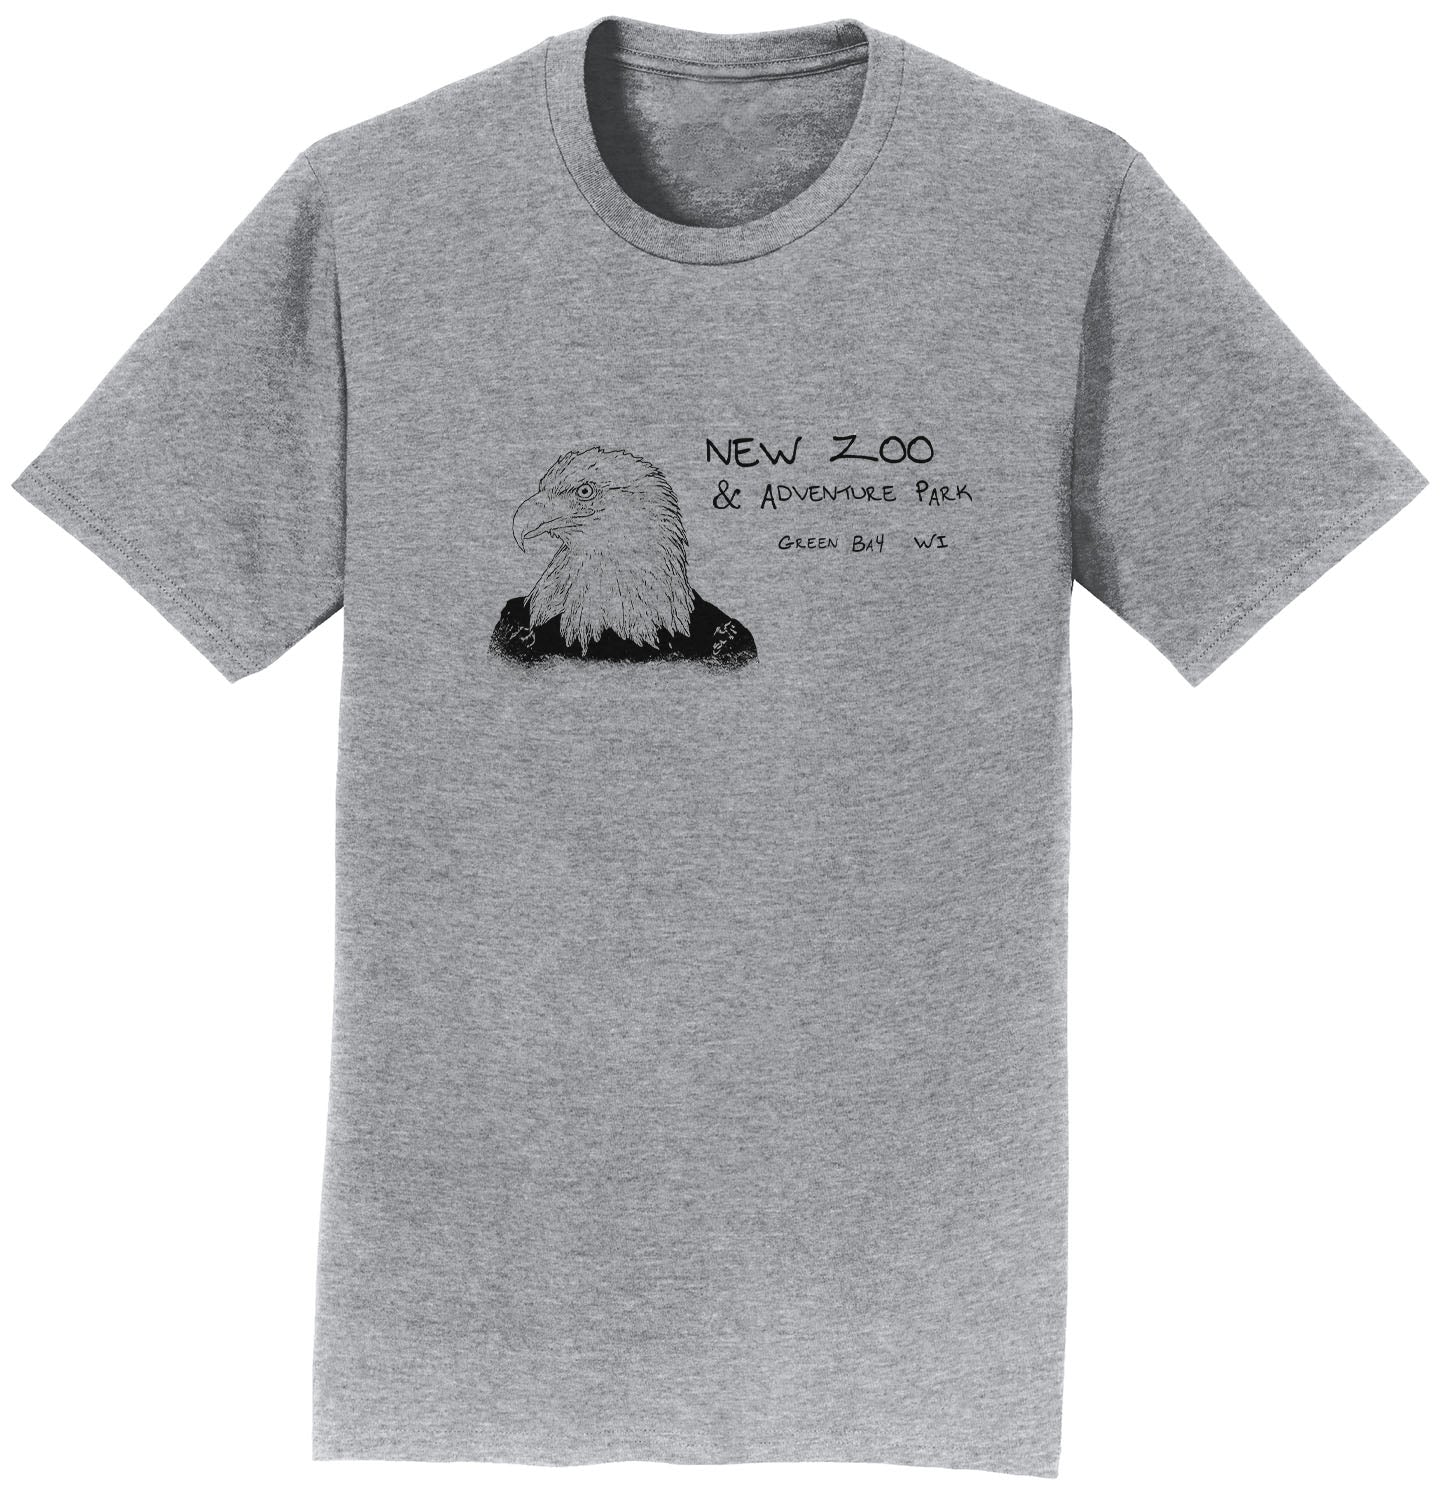 NEW Zoo Bald Eagle Outline - Adult Unisex T-Shirt